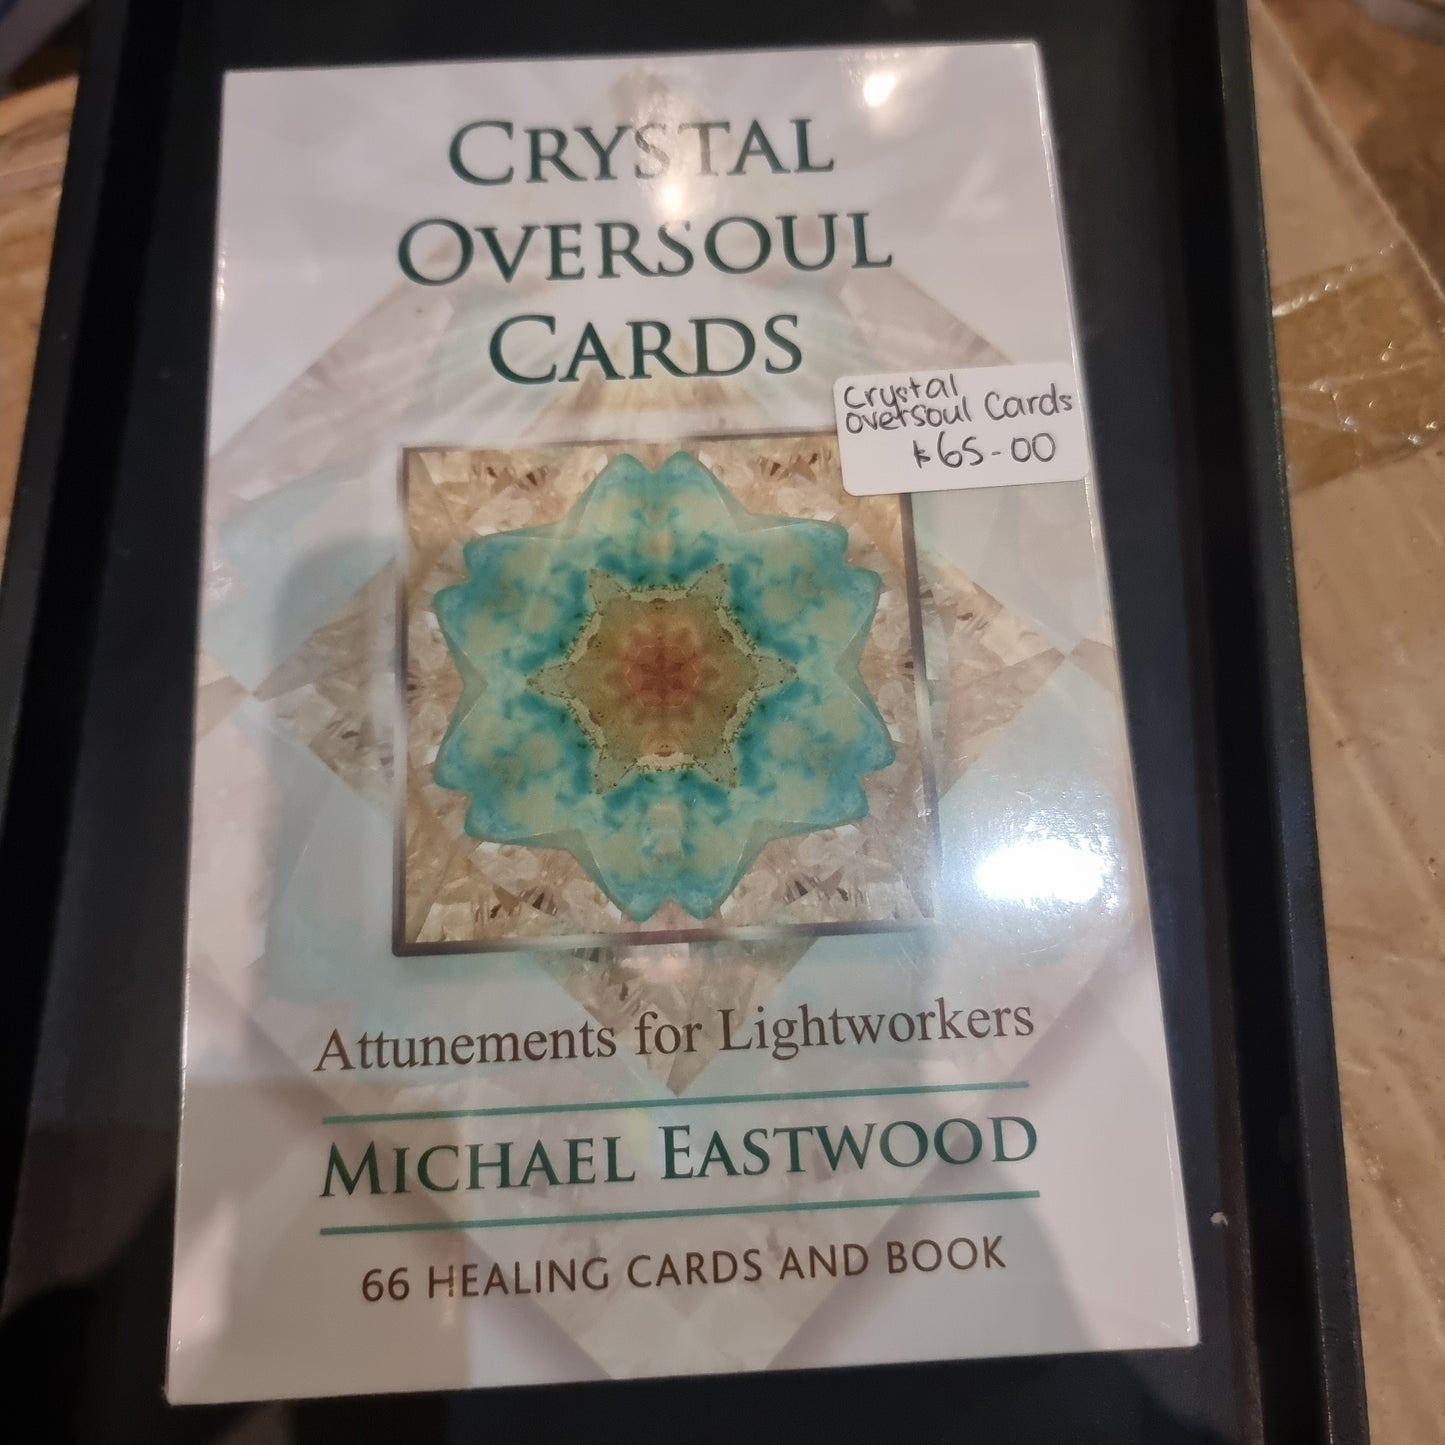 Crystal oversoul cards - Rivendell Shop